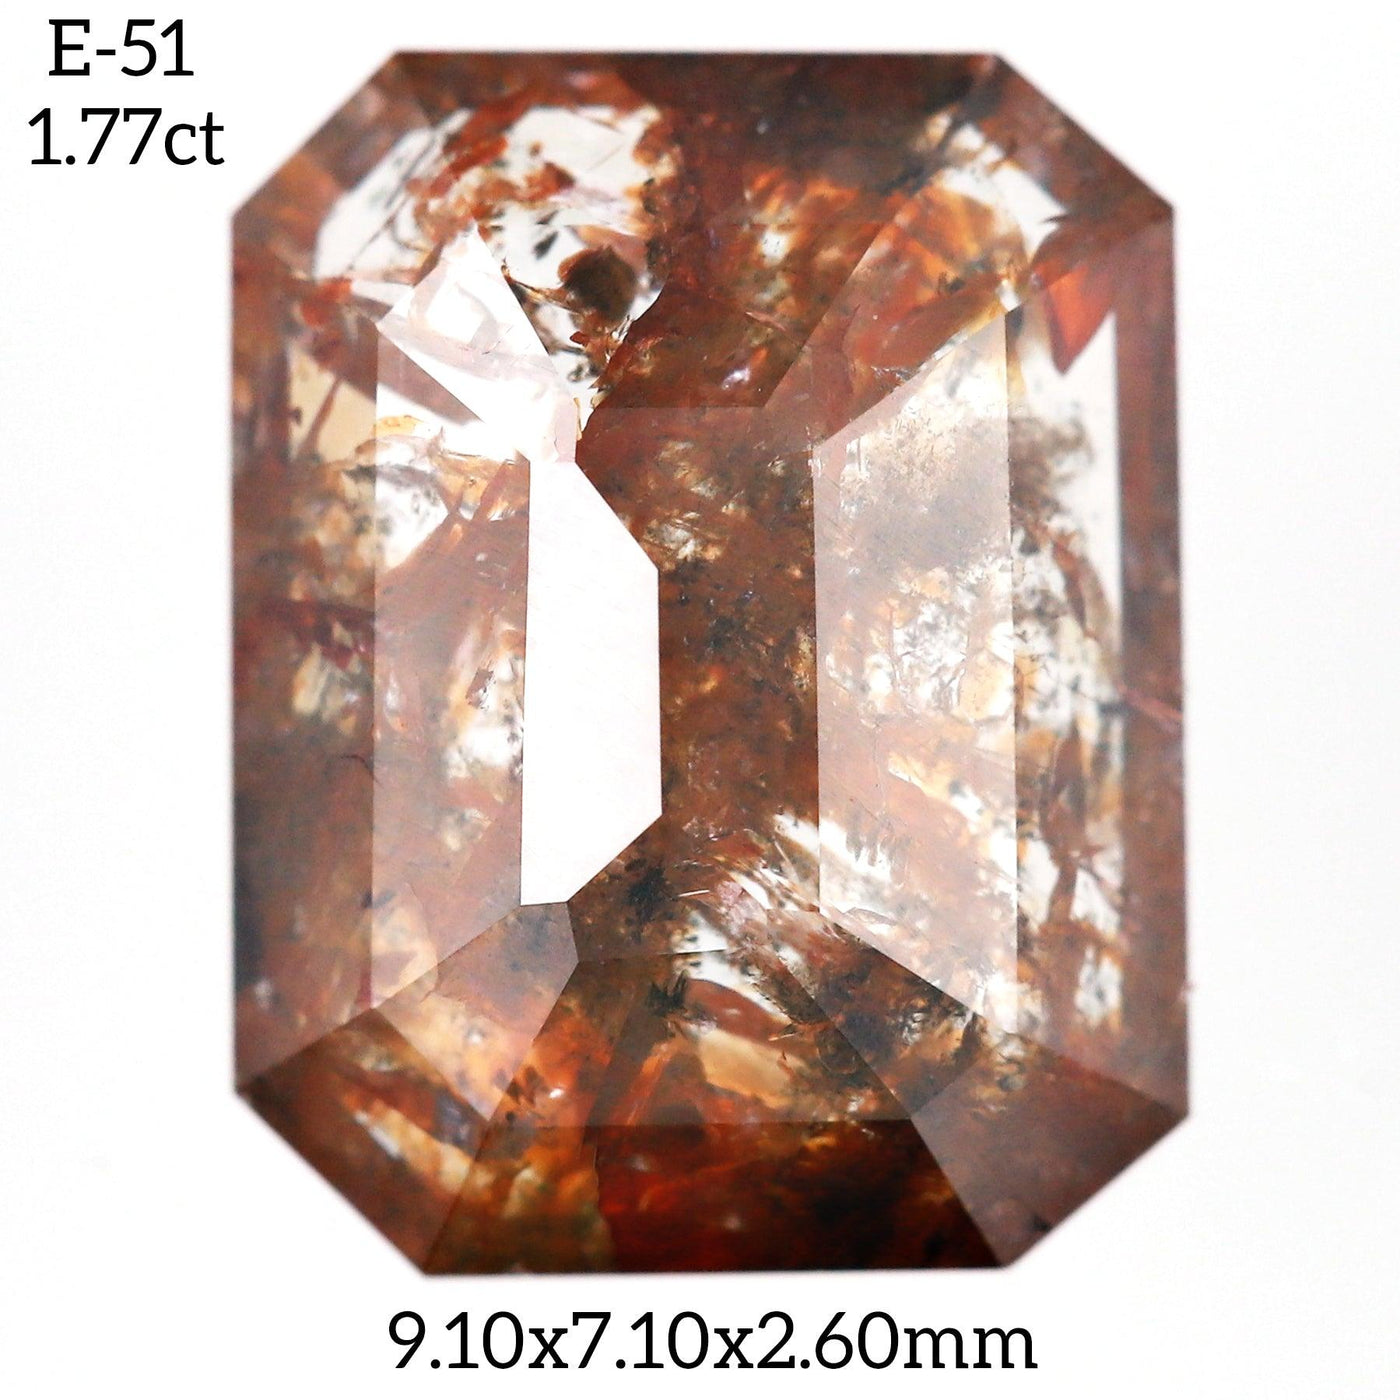 E51 - Salt and pepper emerald diamond